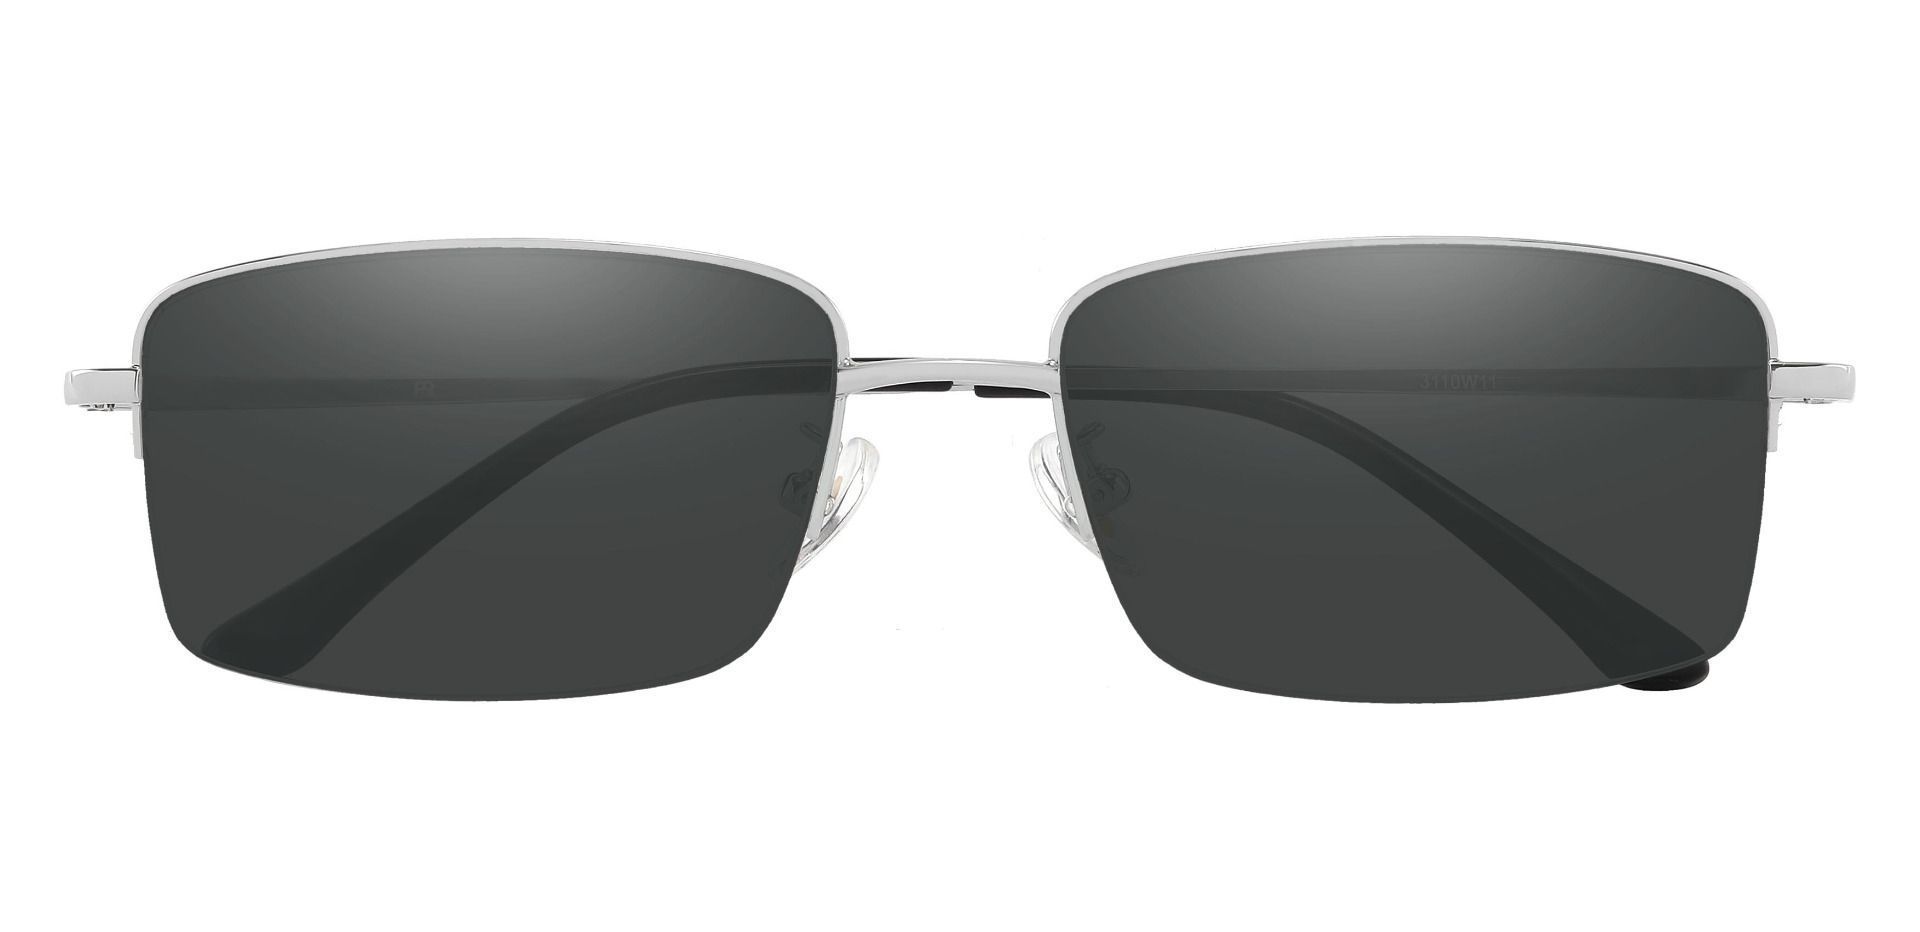 Bellmont Rectangle Progressive Sunglasses - Silver Frame With Gray Lenses